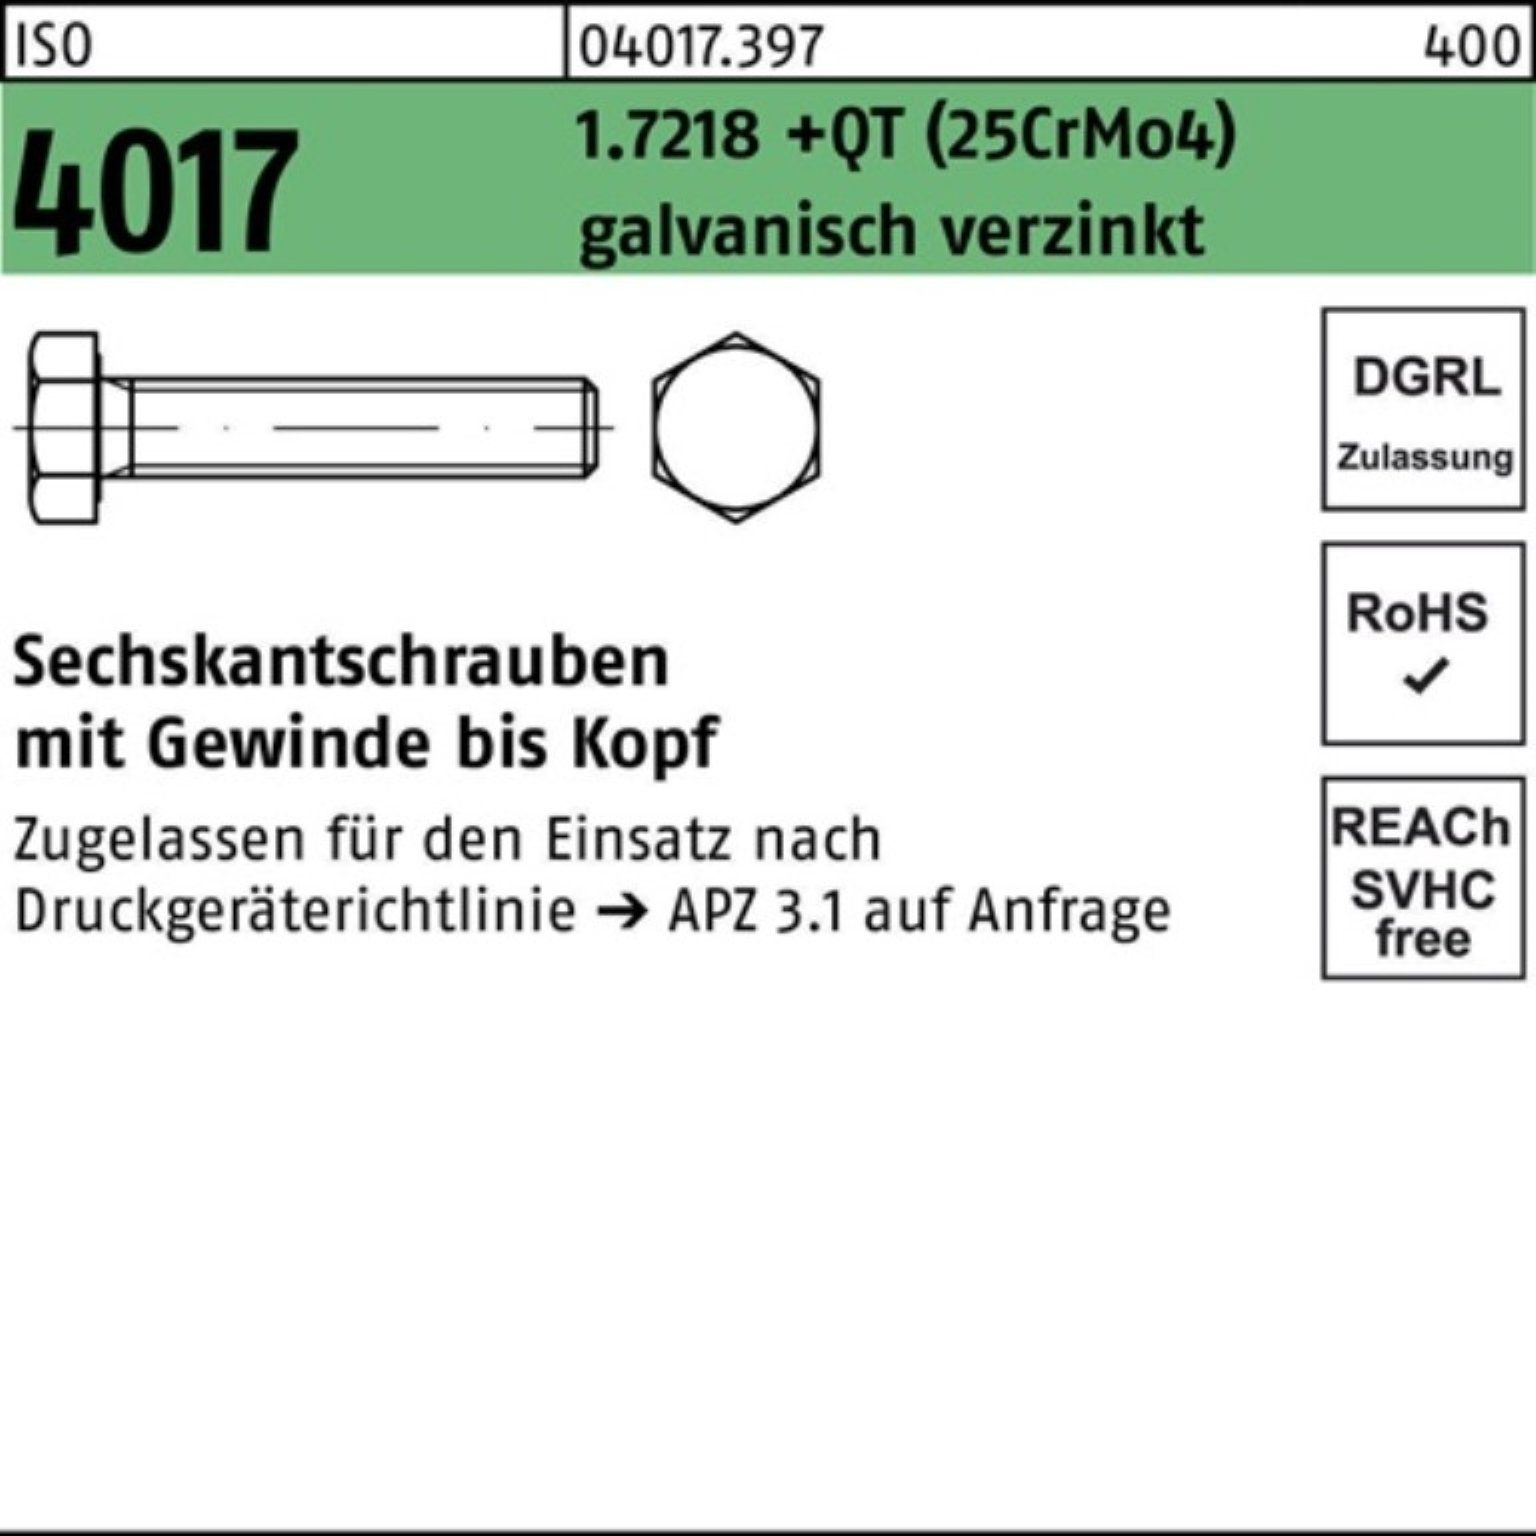 Bufab Sechskantschraube 100er Pack +QT (25CrMo4) 1.7218 M30x80 VG ISO Sechskantschraube 4017 g